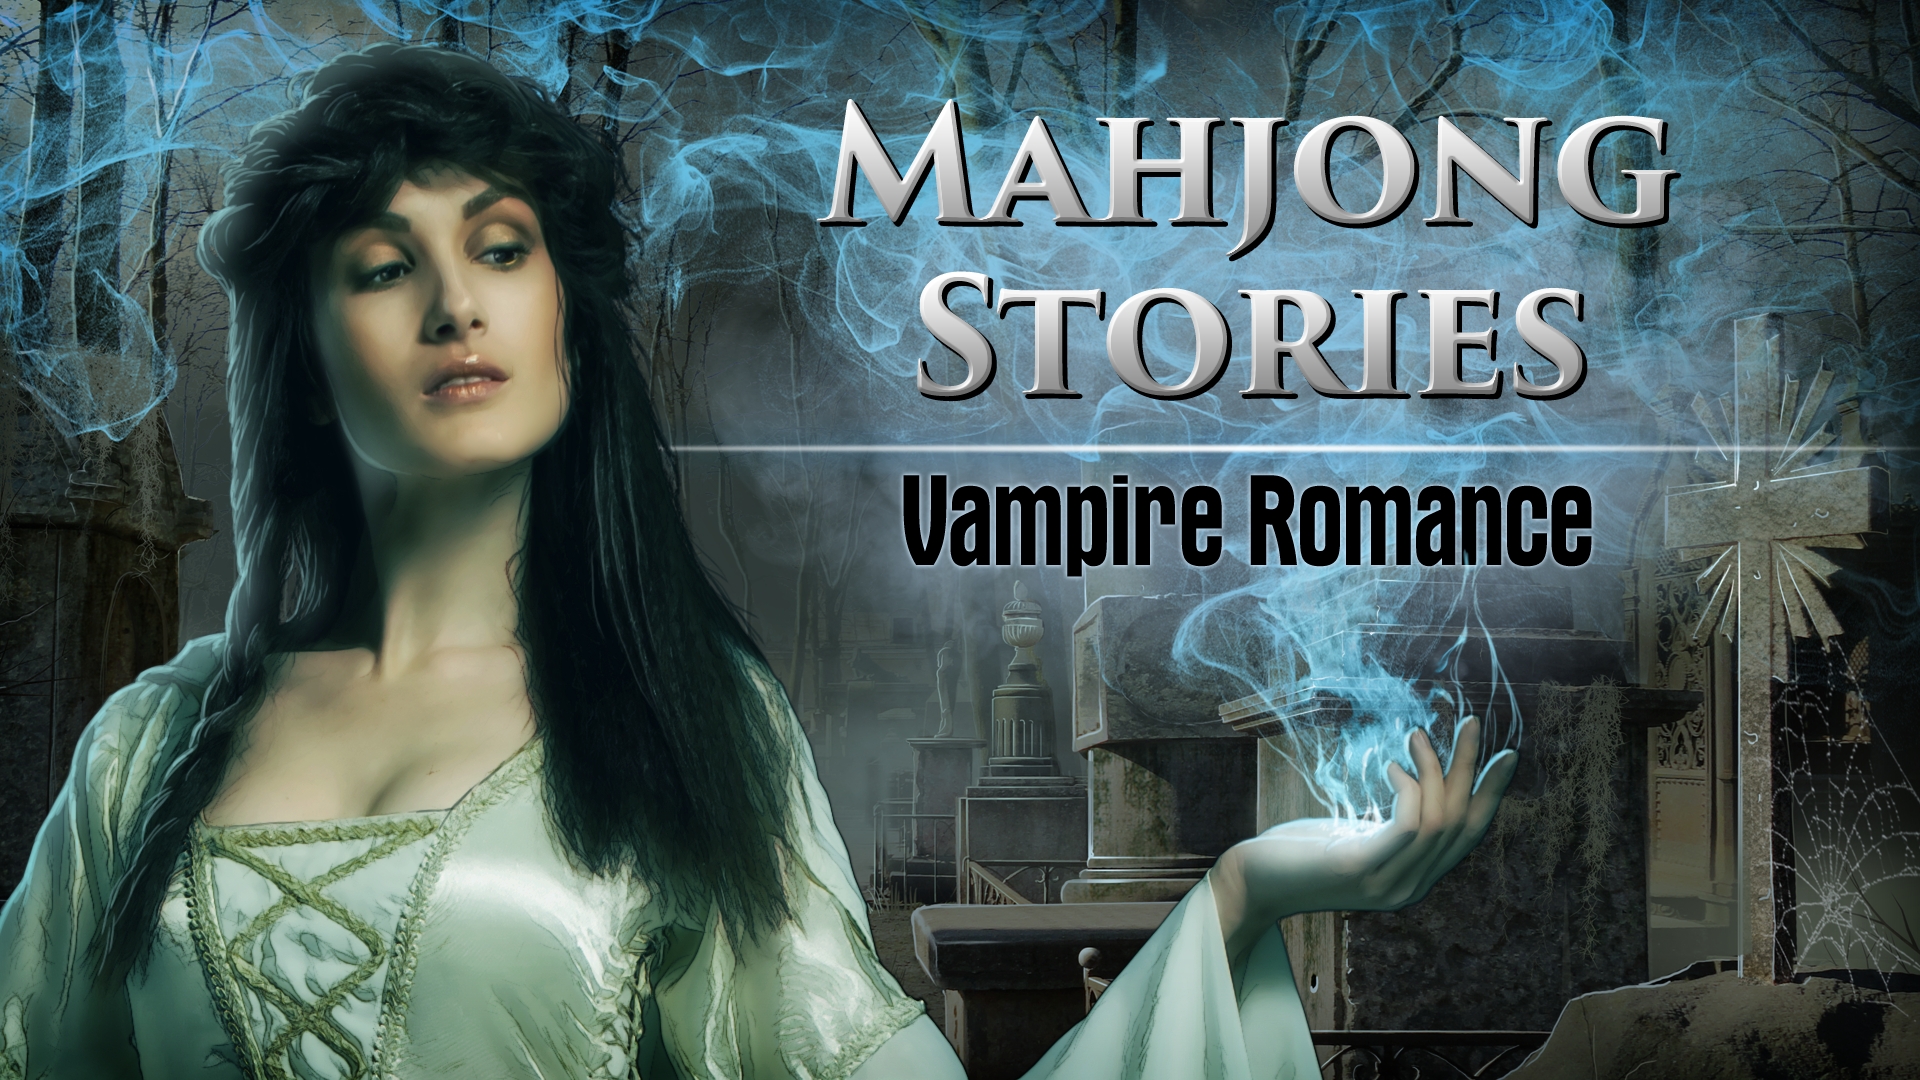 Vampire story game. Vampire Romance игра. Mahjong stories Vampire Romance. Vampire Romance. The Mahjong Huntress.